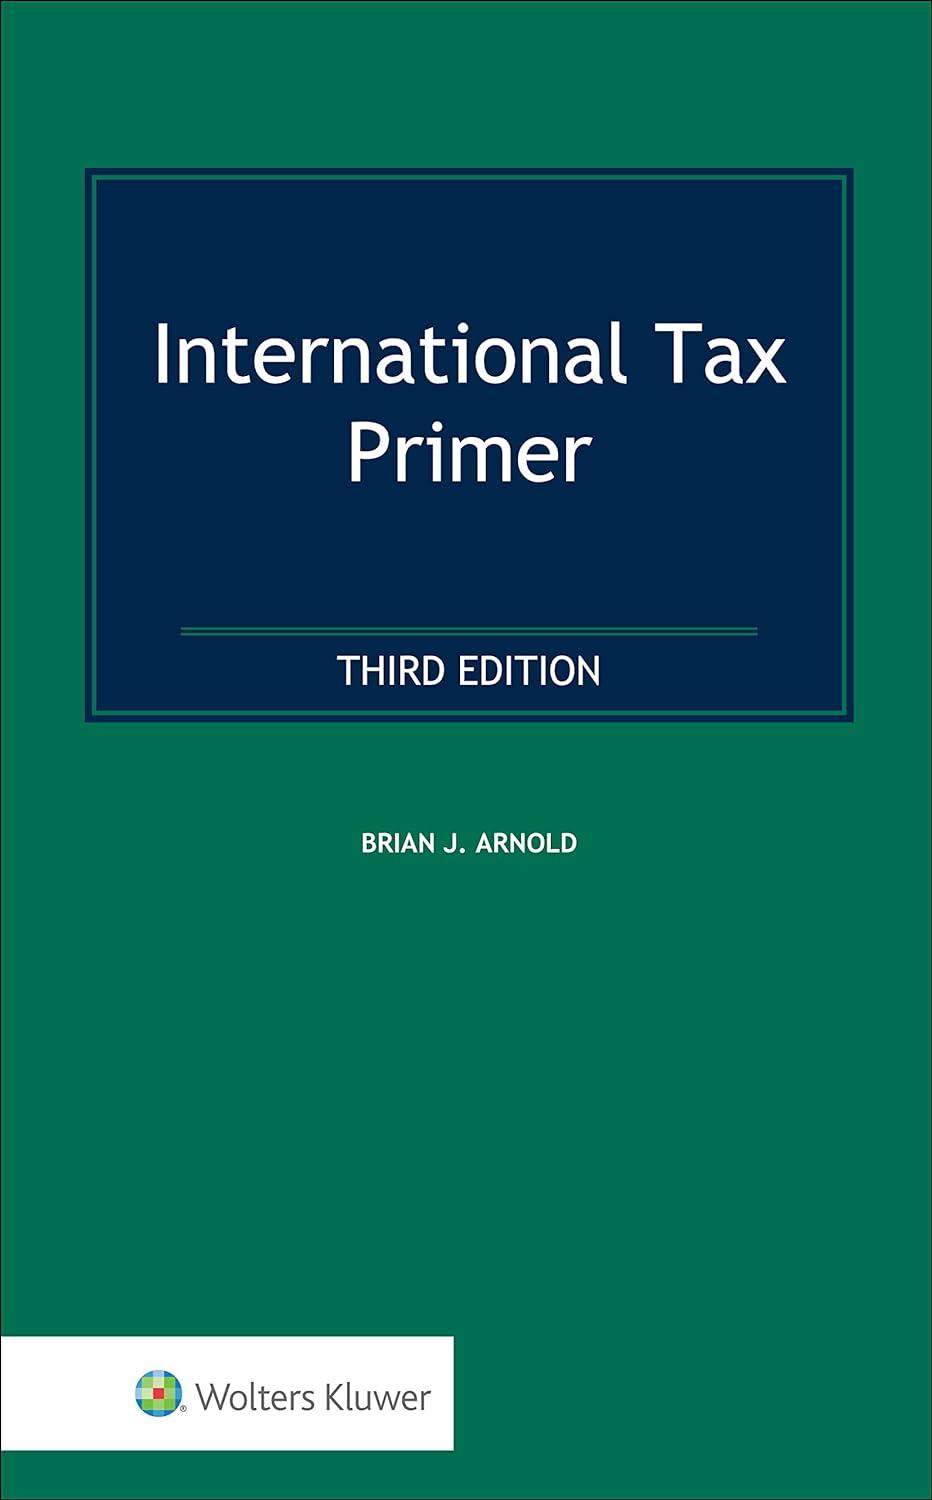 international tax primer 3rd edition brian arnold 9041159754, 978-9041159755